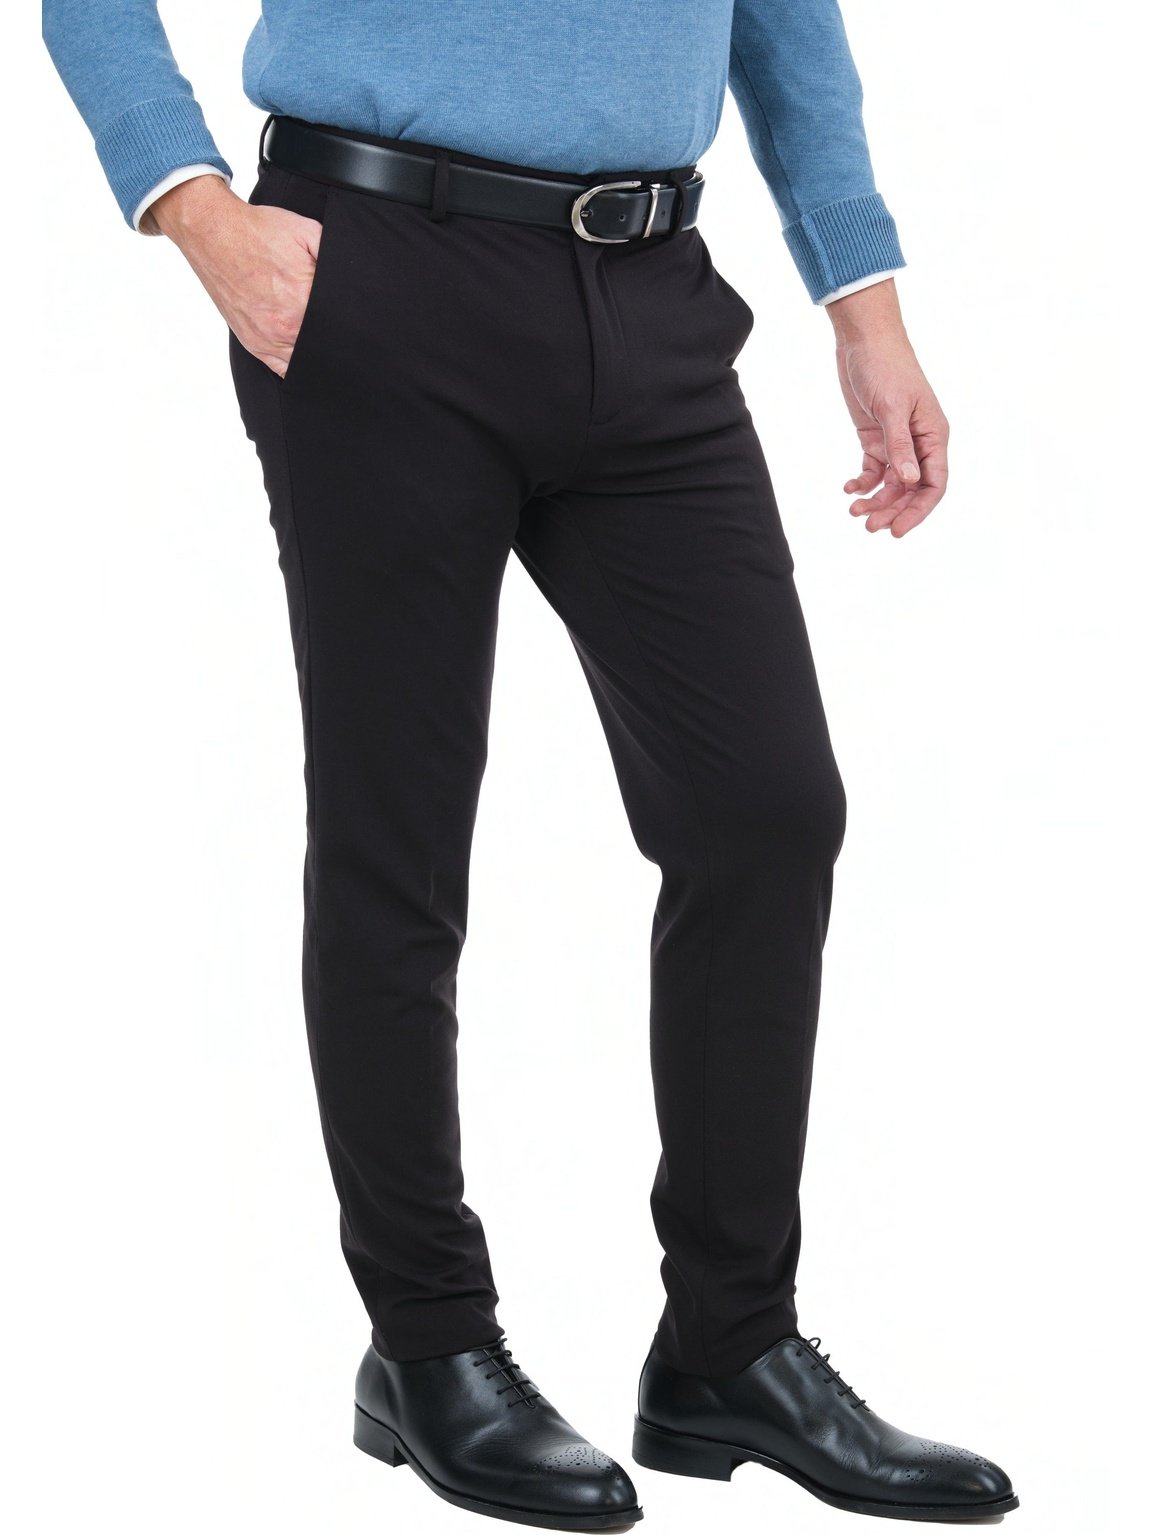   Essentials Men's Slim-Fit Flat-Front Dress Pant